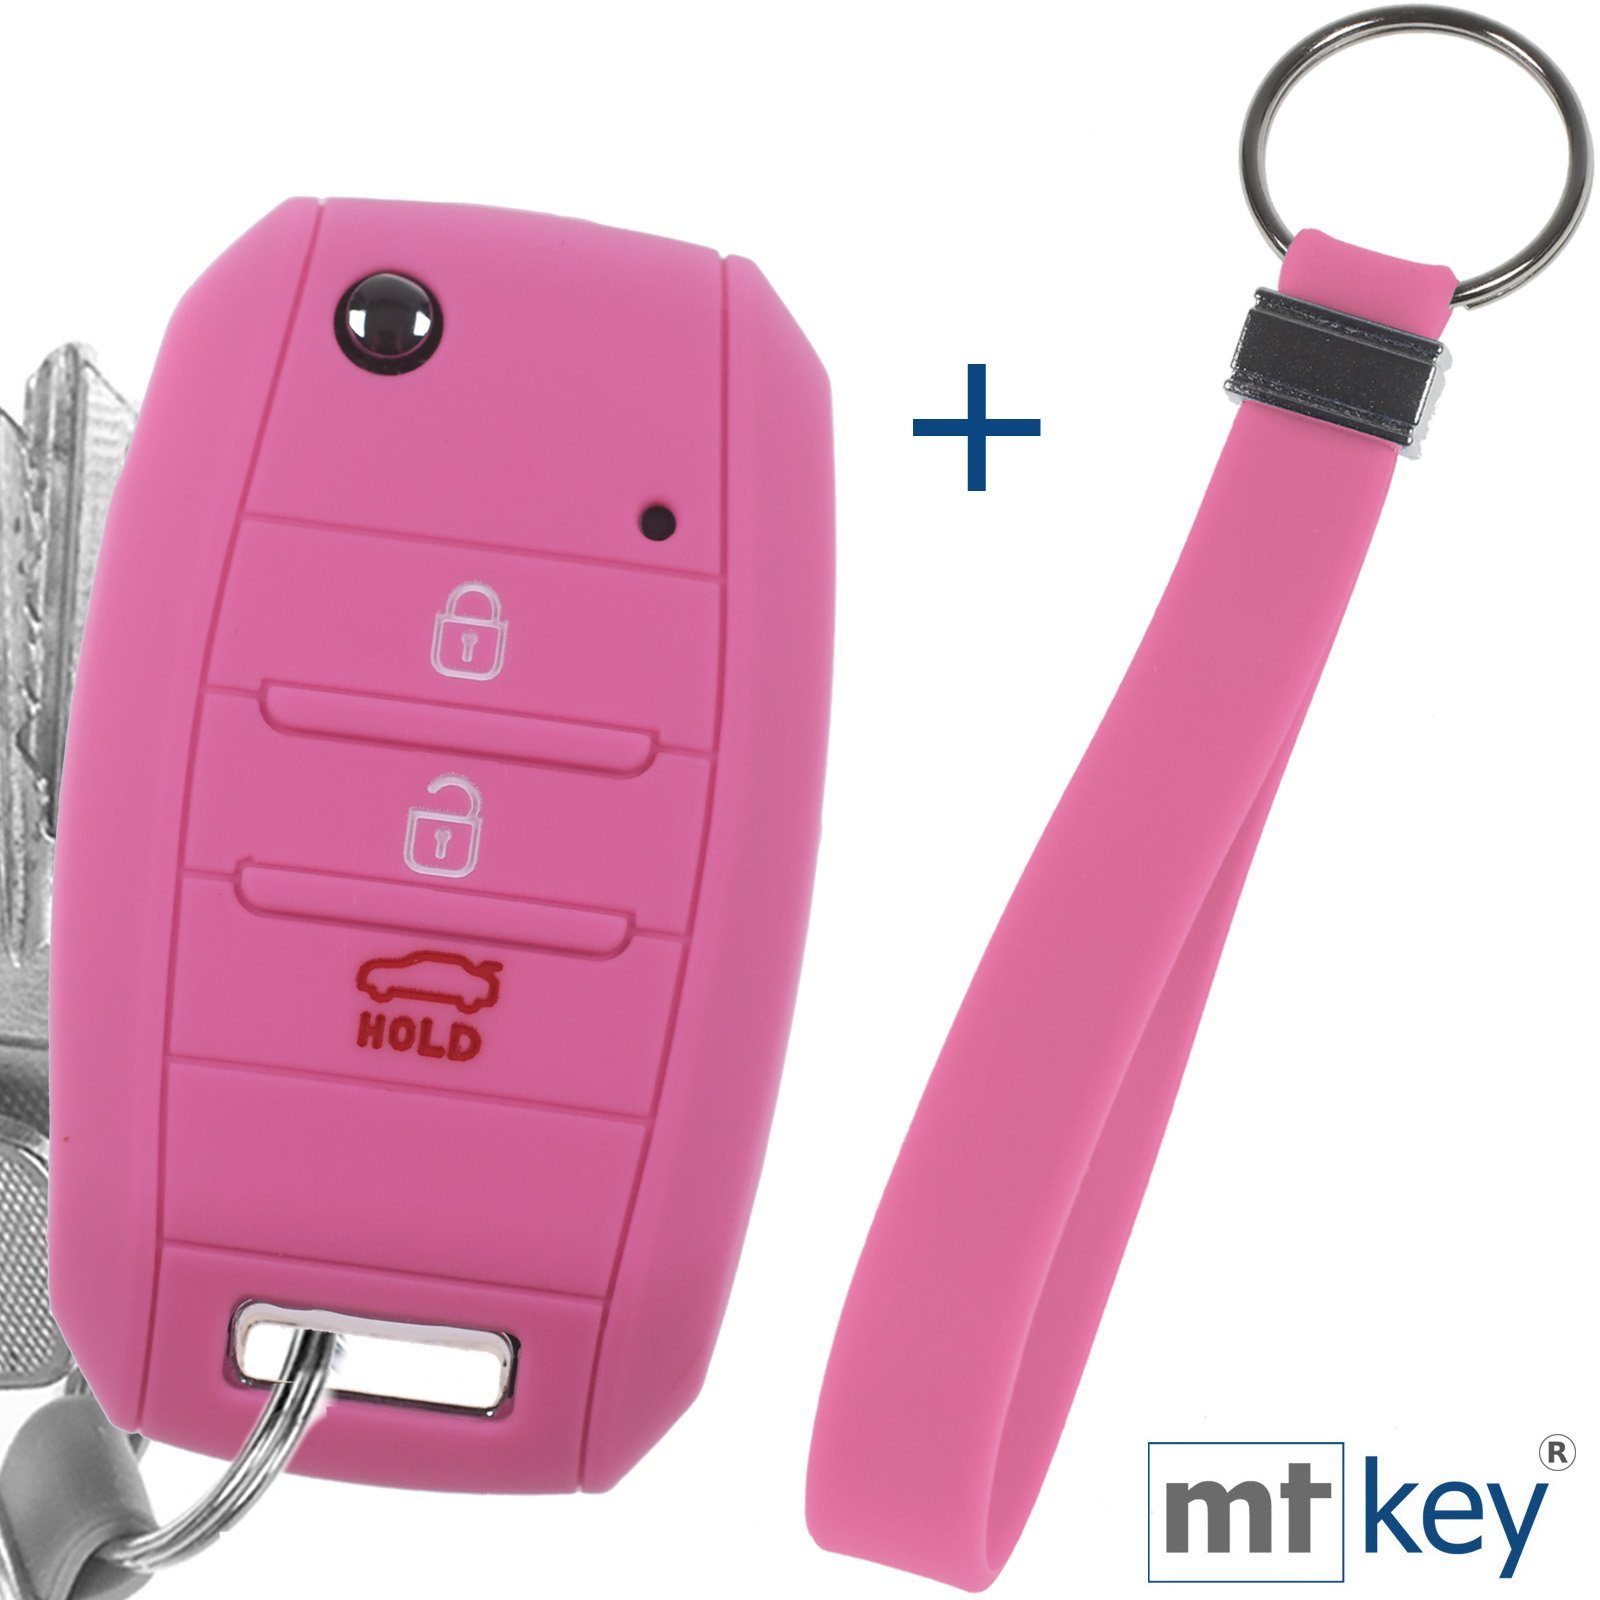 mt-key Schlüsseltasche Autoschlüssel Softcase Silikon Schutzhülle Rosa mit Schlüsselband, für KIA Picantio Rio Ceed Soul Sportage Stonic Carens 3 Tasten